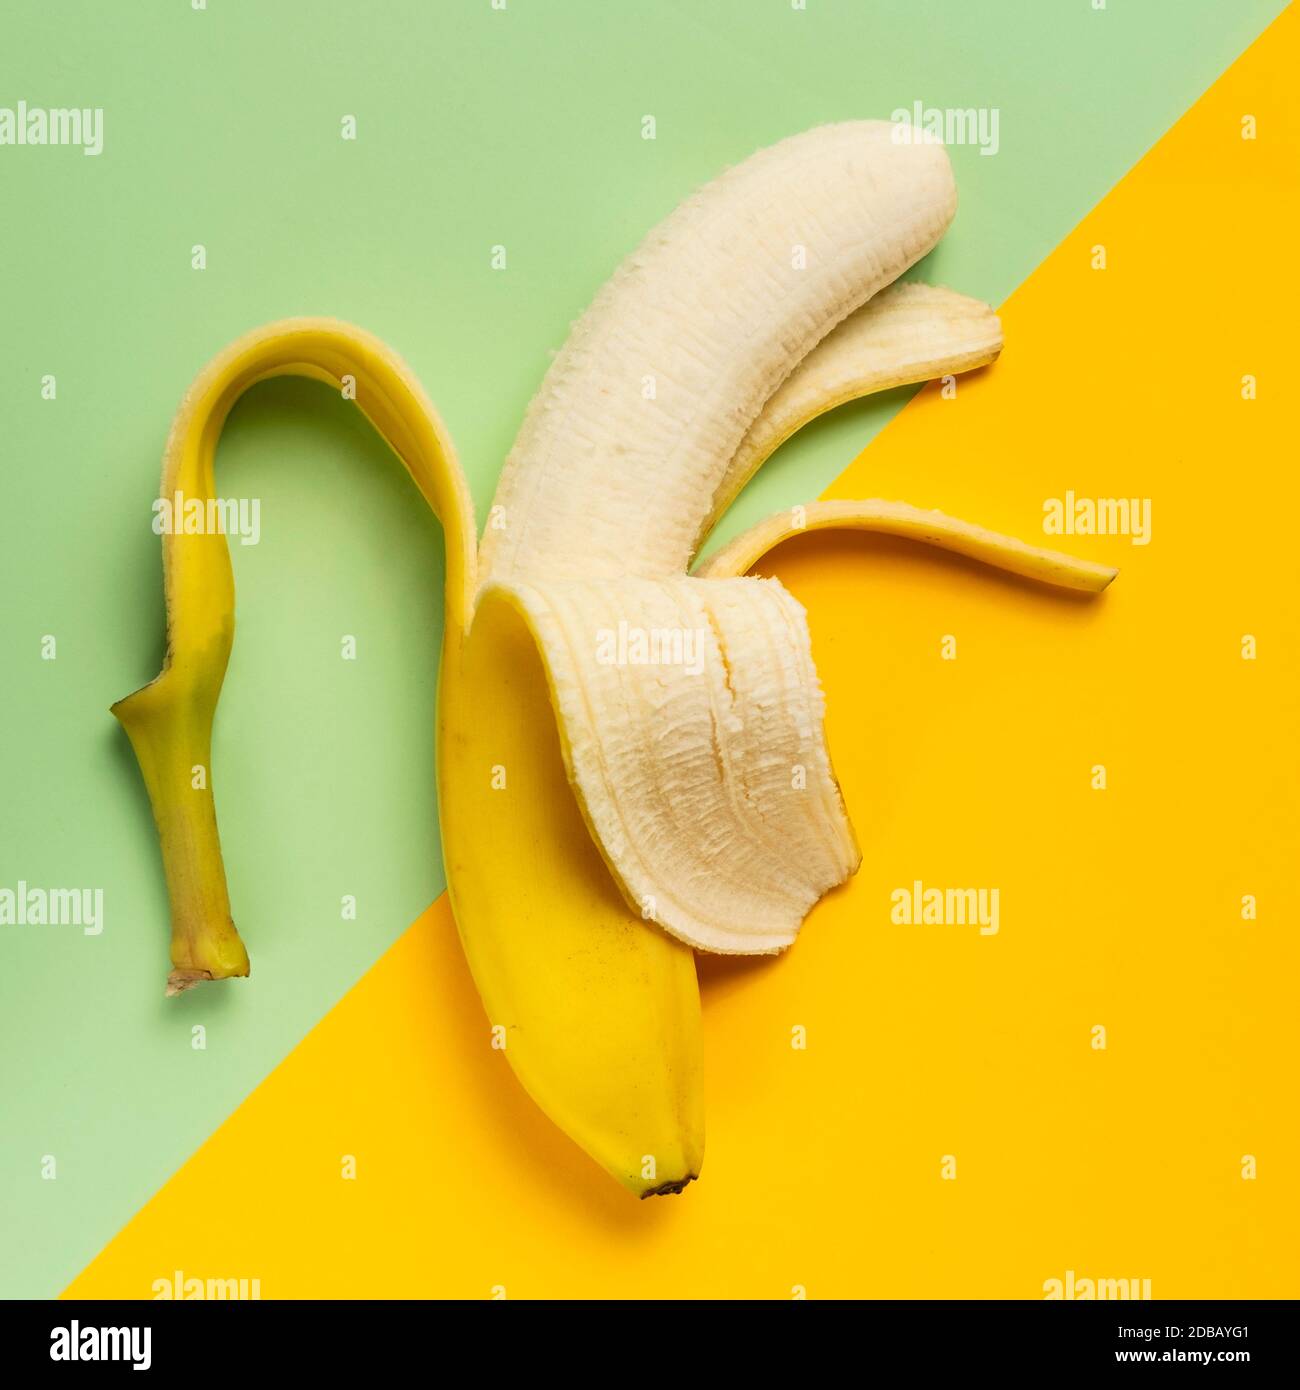 Banana pelata a metà su sfondo verde e giallo Foto Stock